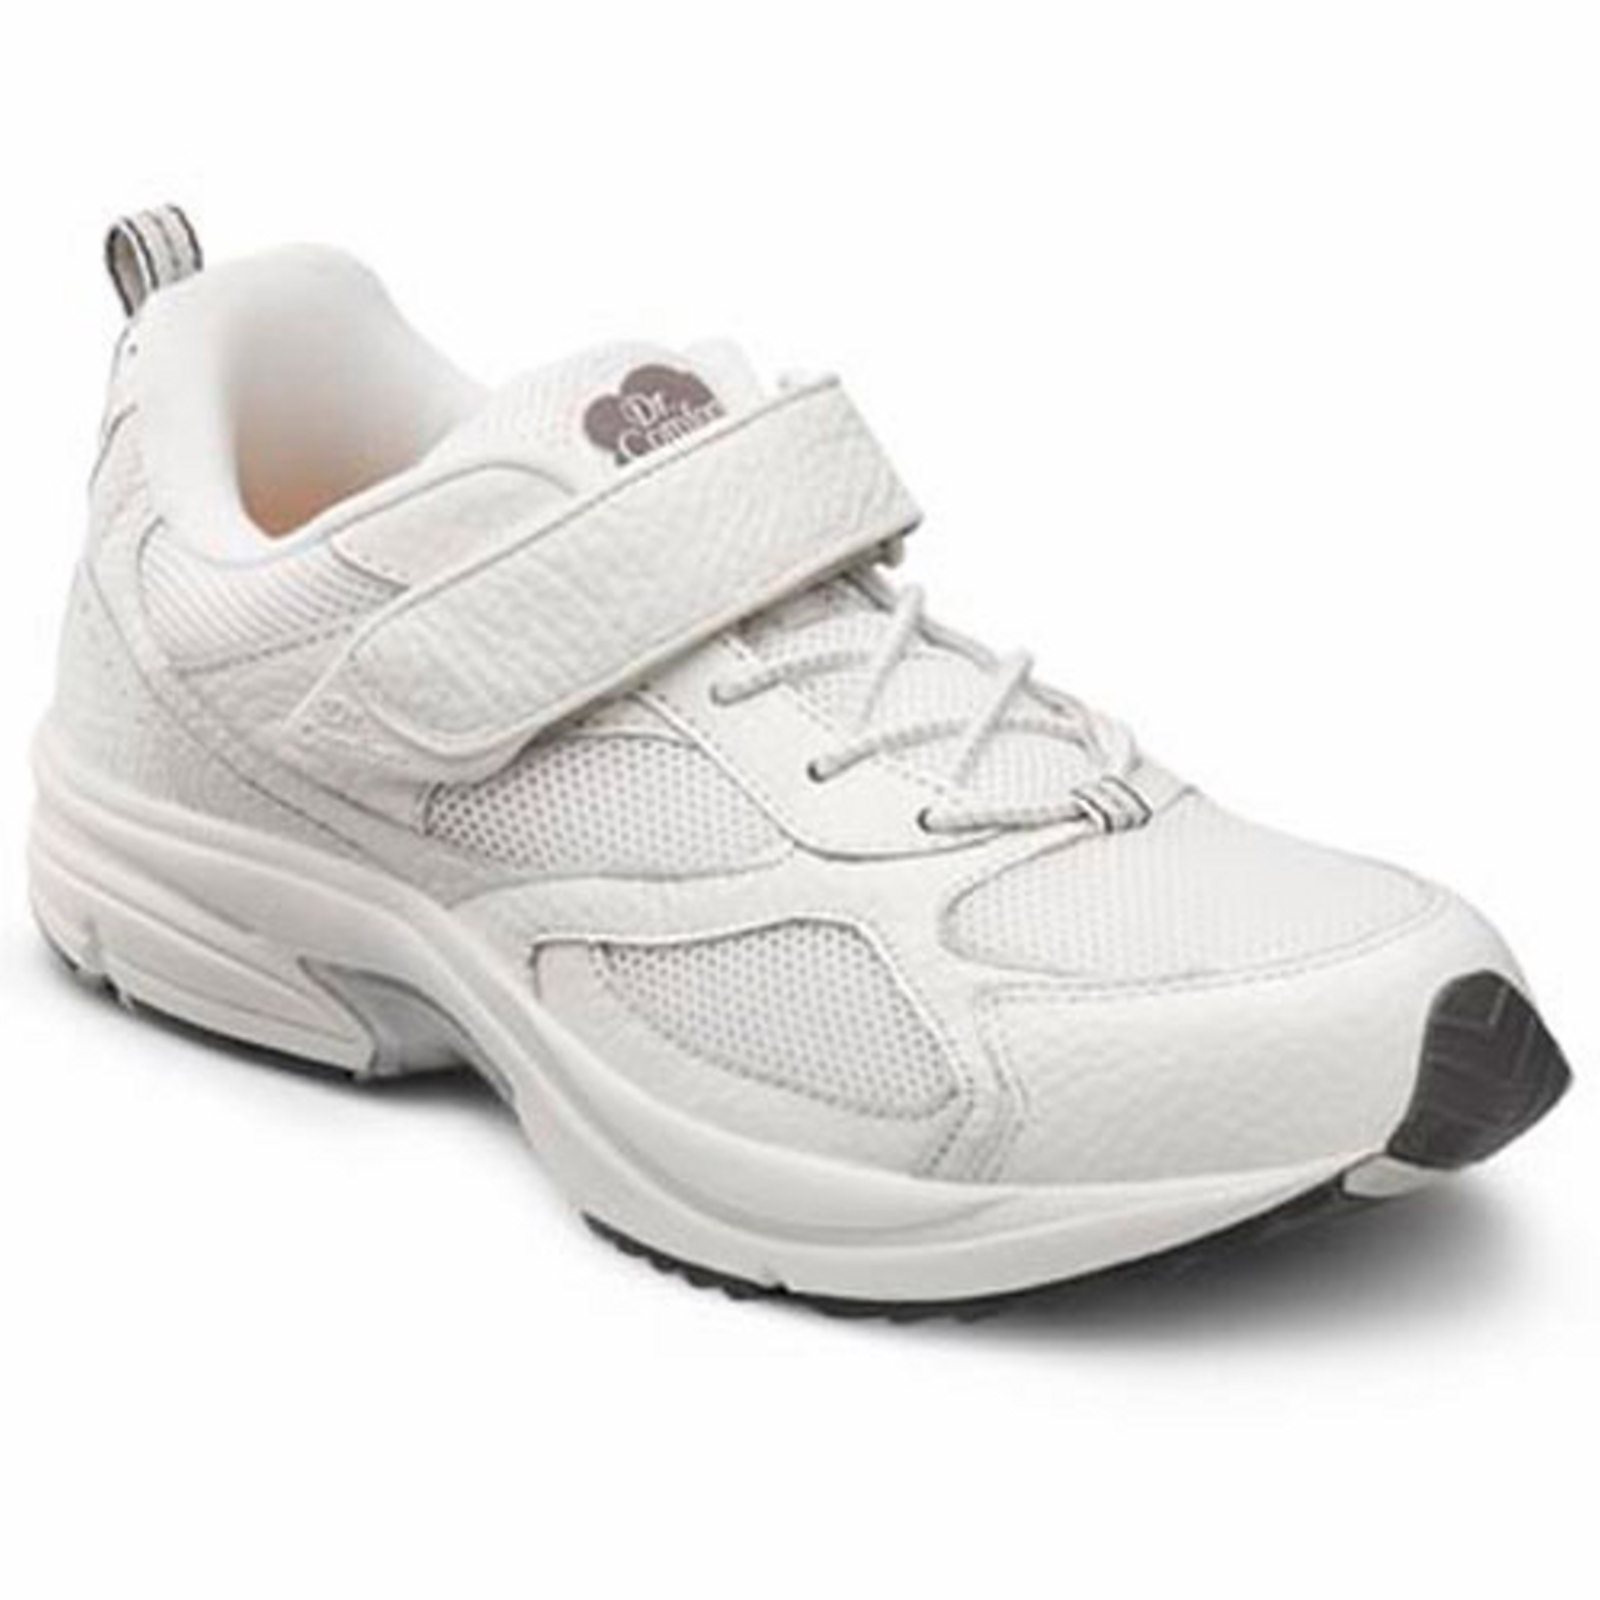 Dr. Comfort Endurance Men's Athletic Shoe: 11 Medium (B/D) White Elastic Lace w/Strap - image 1 of 4